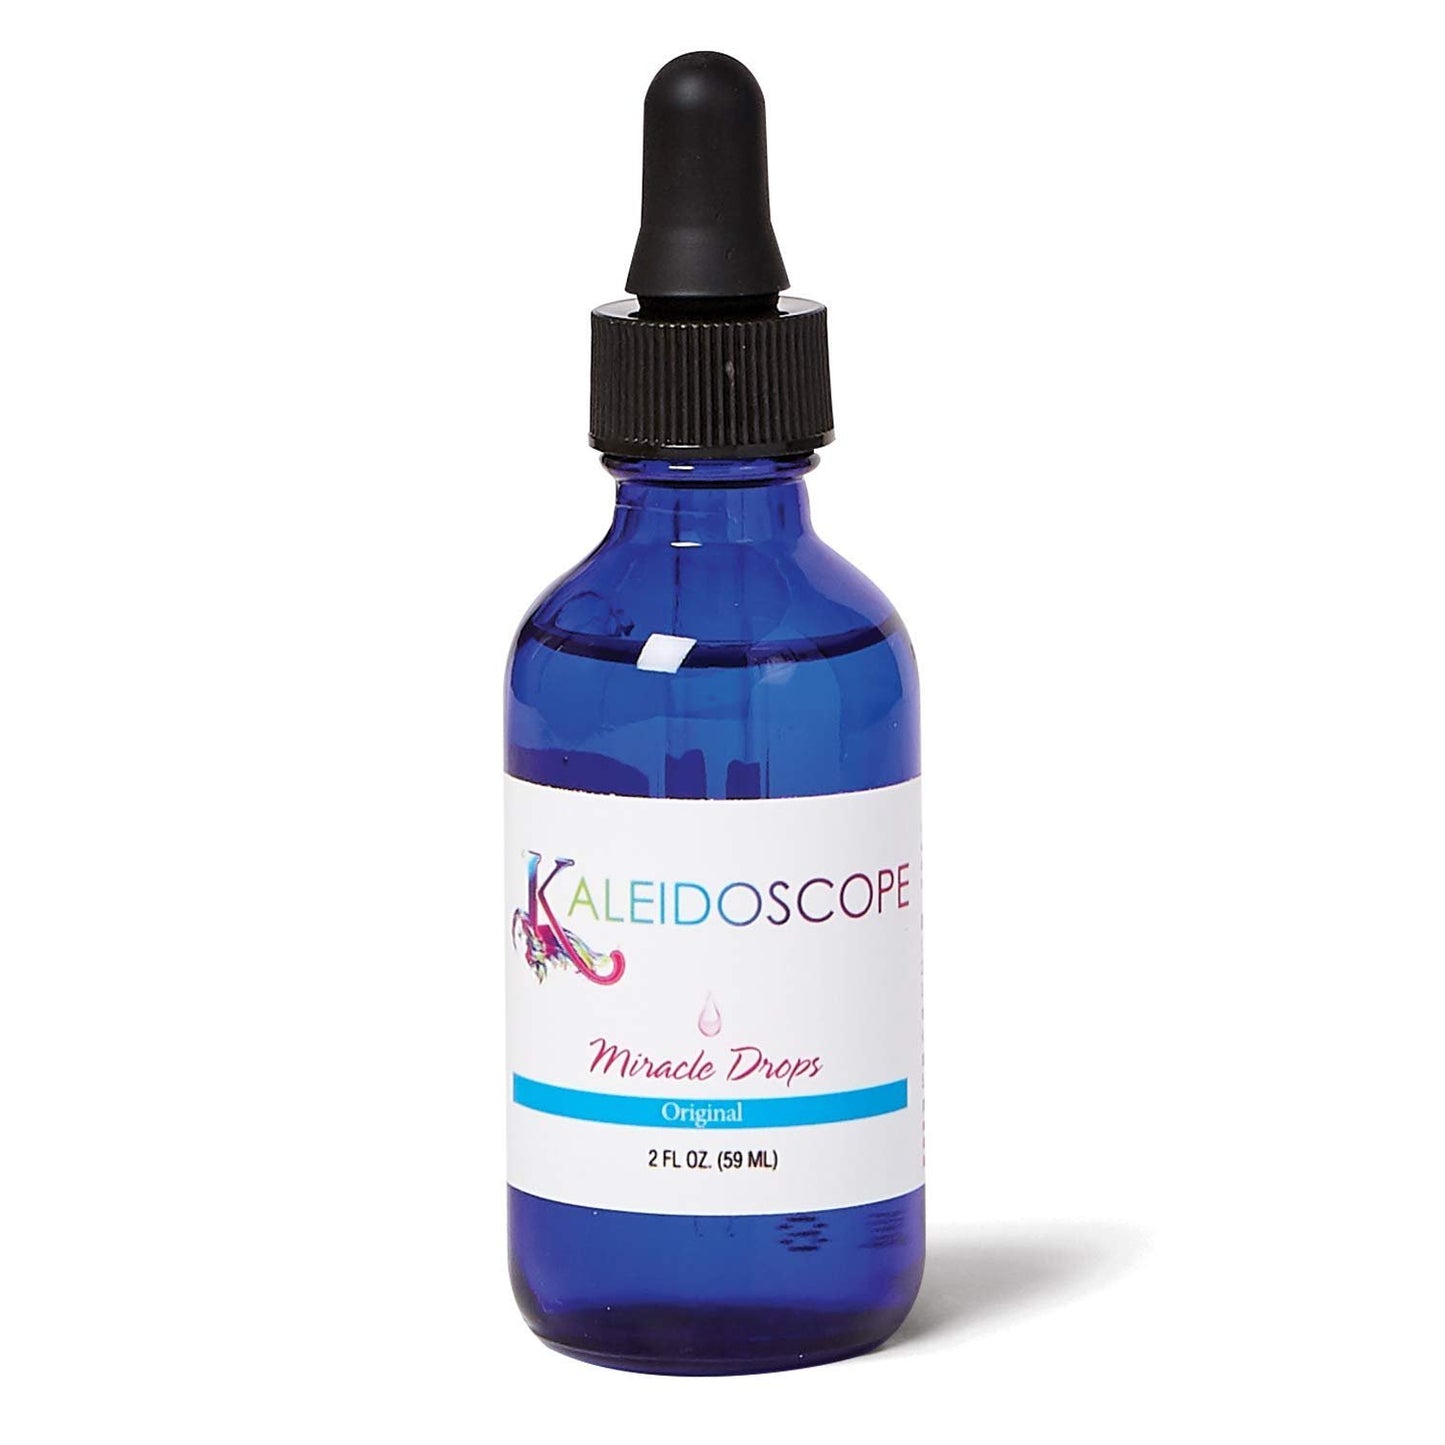 Kaleidoscope Miracle Drops Hair Oil | Kaleidoscope